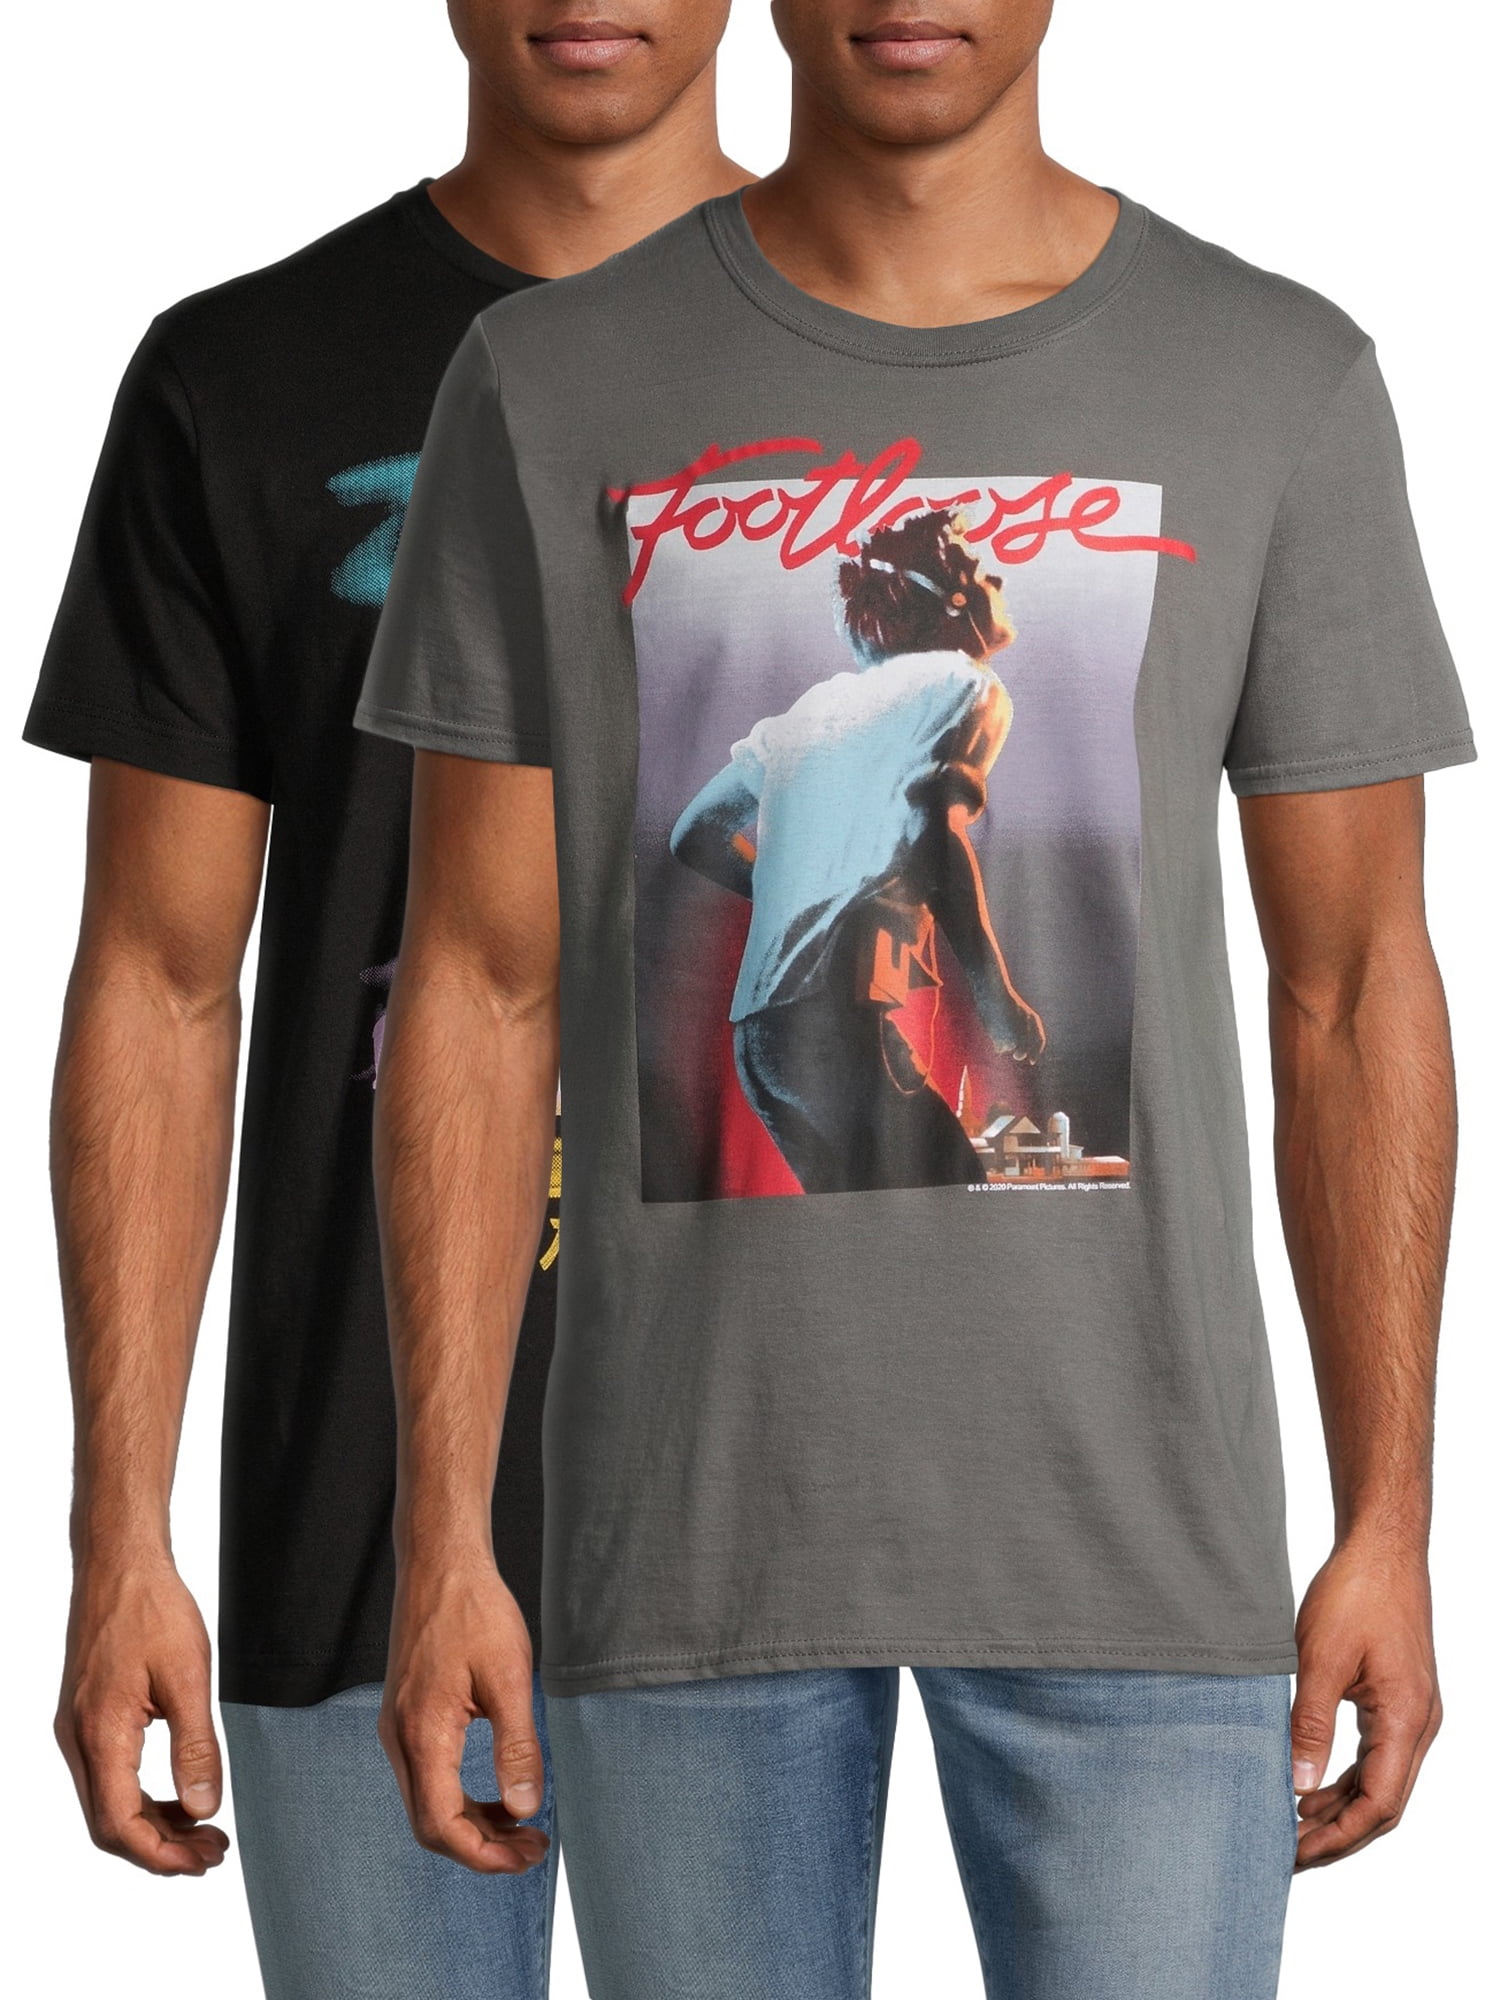 Footloose Loose & Let's Dance Men's and Graphic T-shirts 2-Pack Bundle - Walmart.com